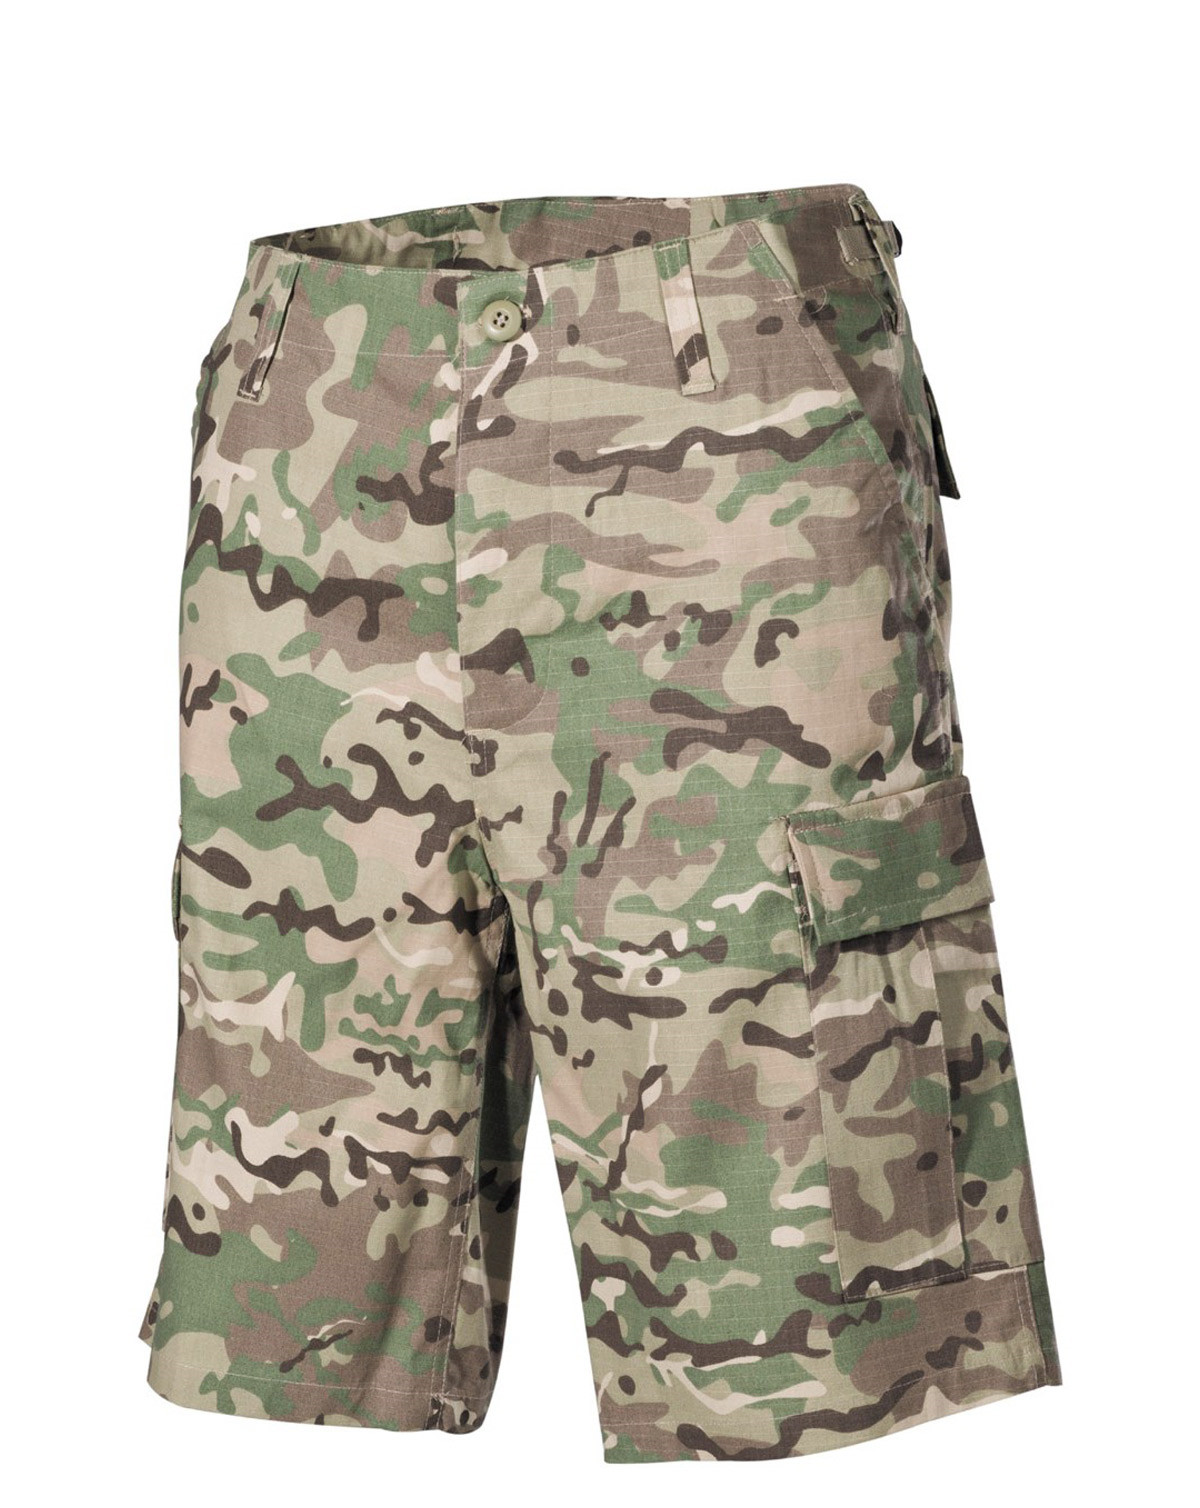 MFH U.S. BDU Bermuda shorts (Multi Camo, 2XL)